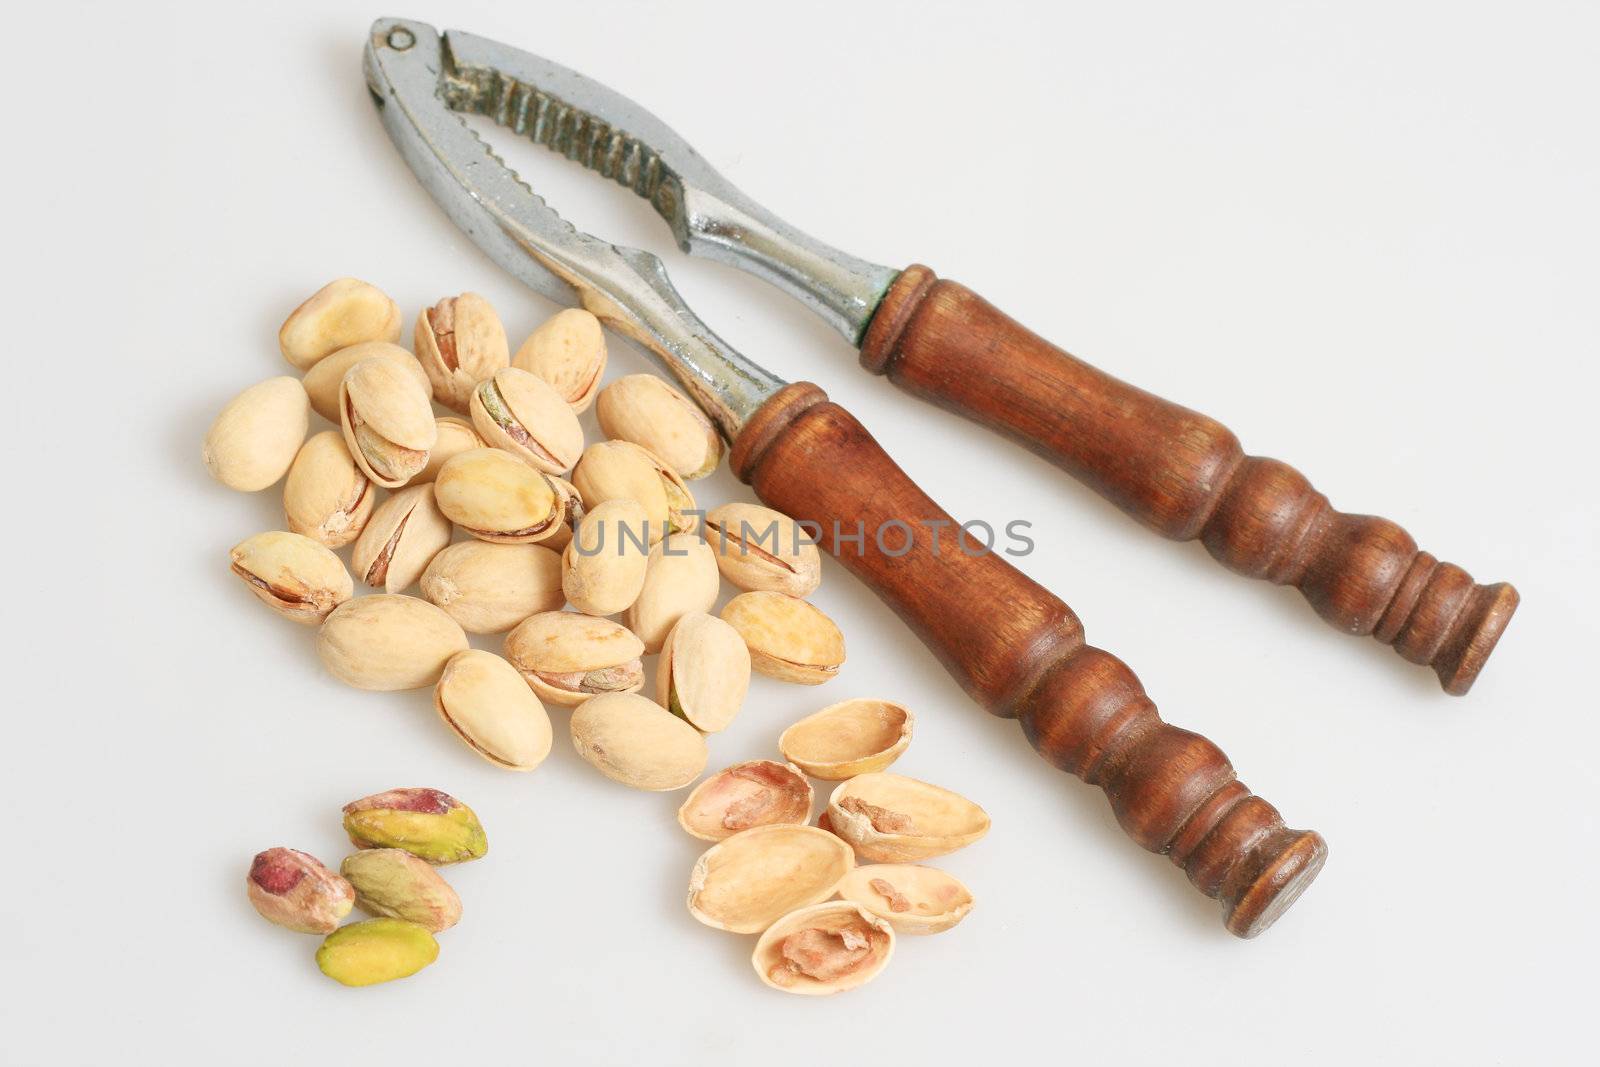 pistachio nuts by jonasbsl